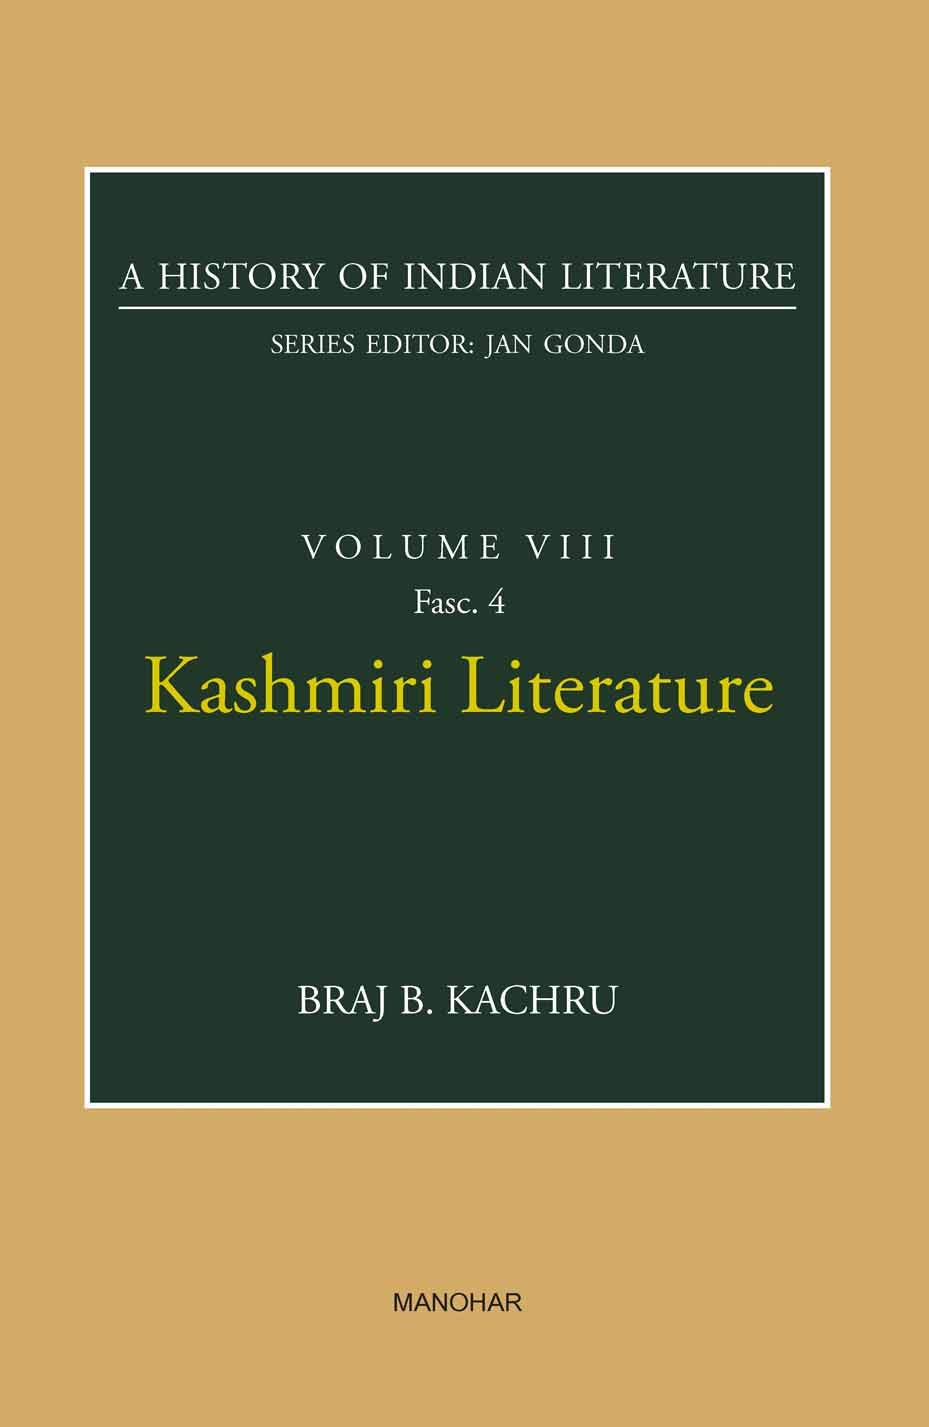 Kashmiri Literature (A History of Indian Literature, volume 8, Fasc. 4)